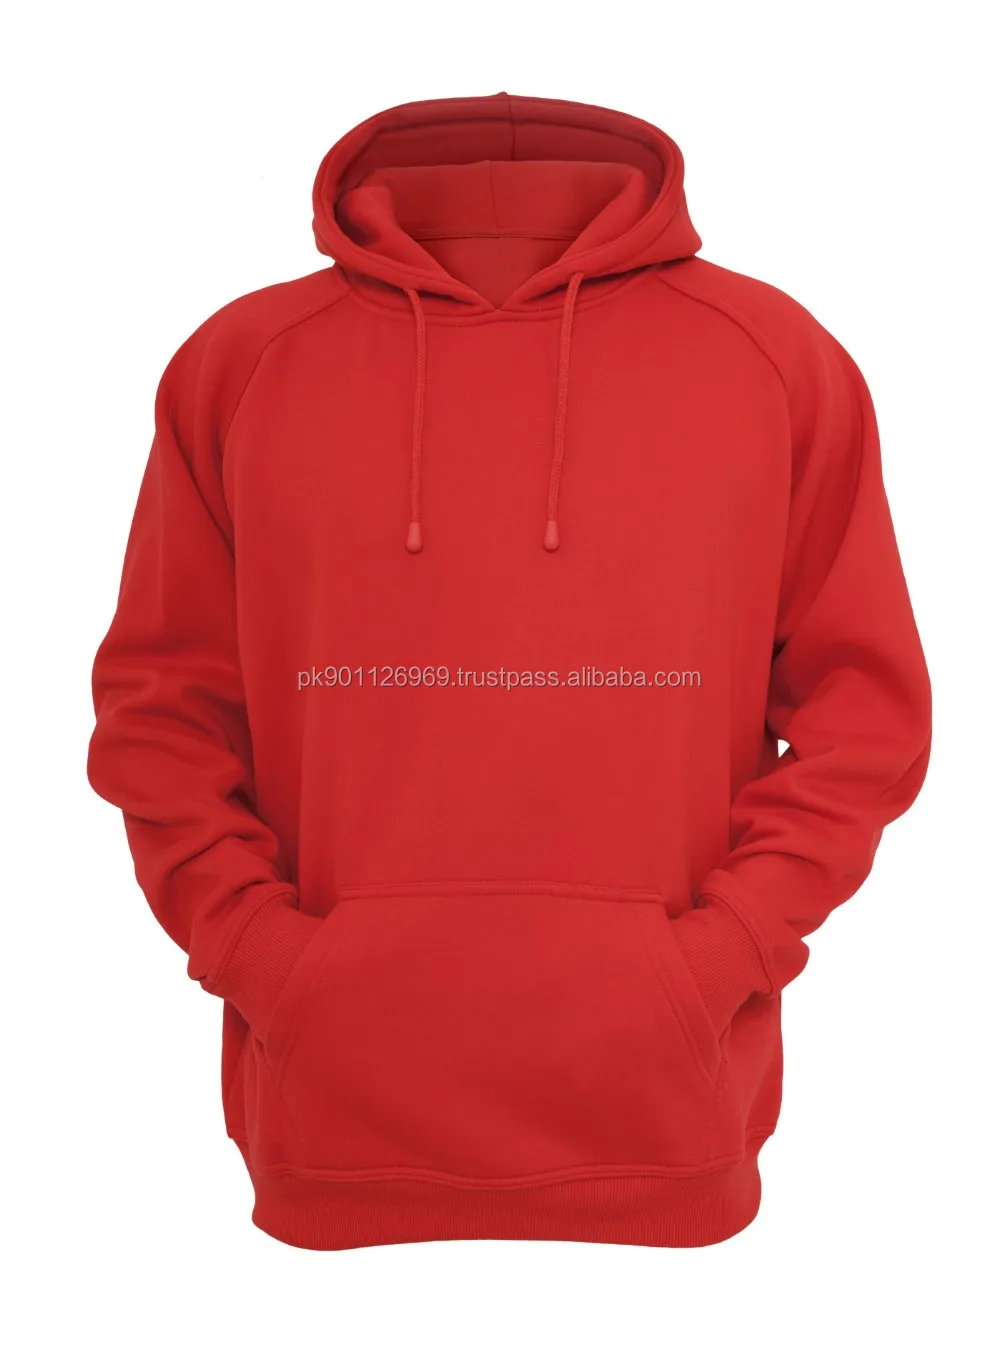 Customized Cotton Fleece Hoodies/ Hooded Sweatshirts Sudaderas - Buy ...